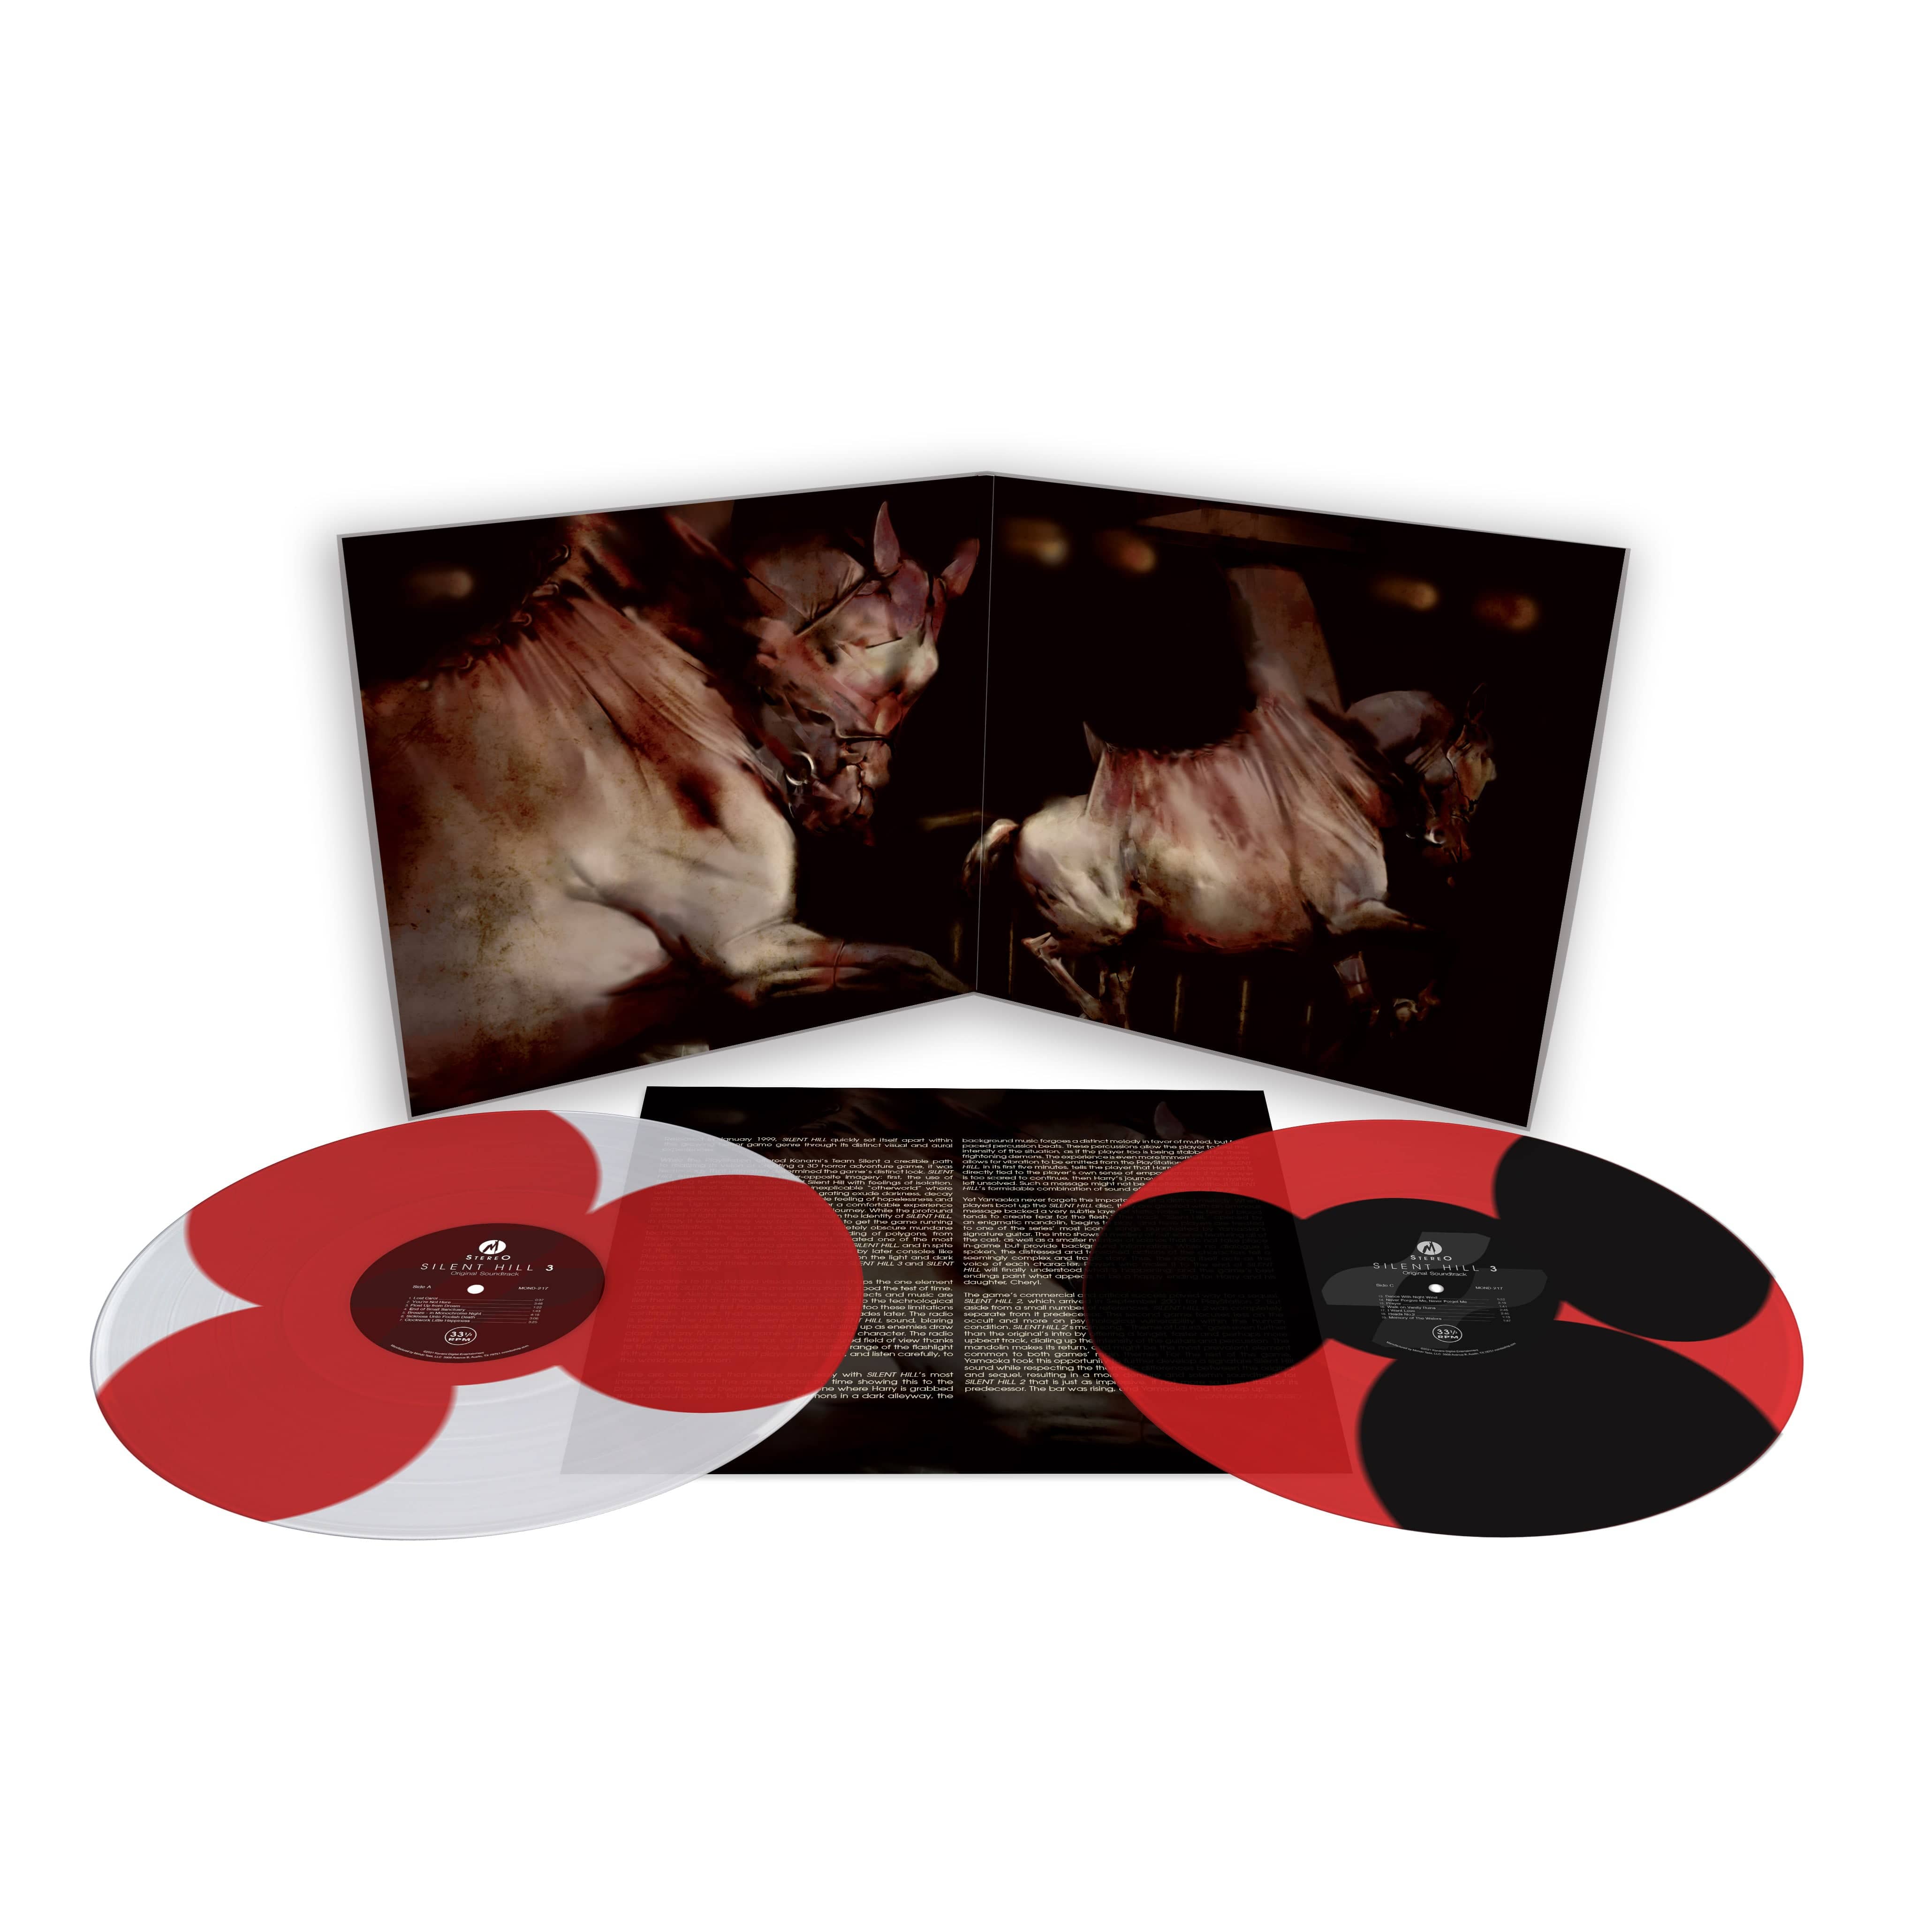 Silent Hill Soundtrack LP サントラ レコード3枚セット-